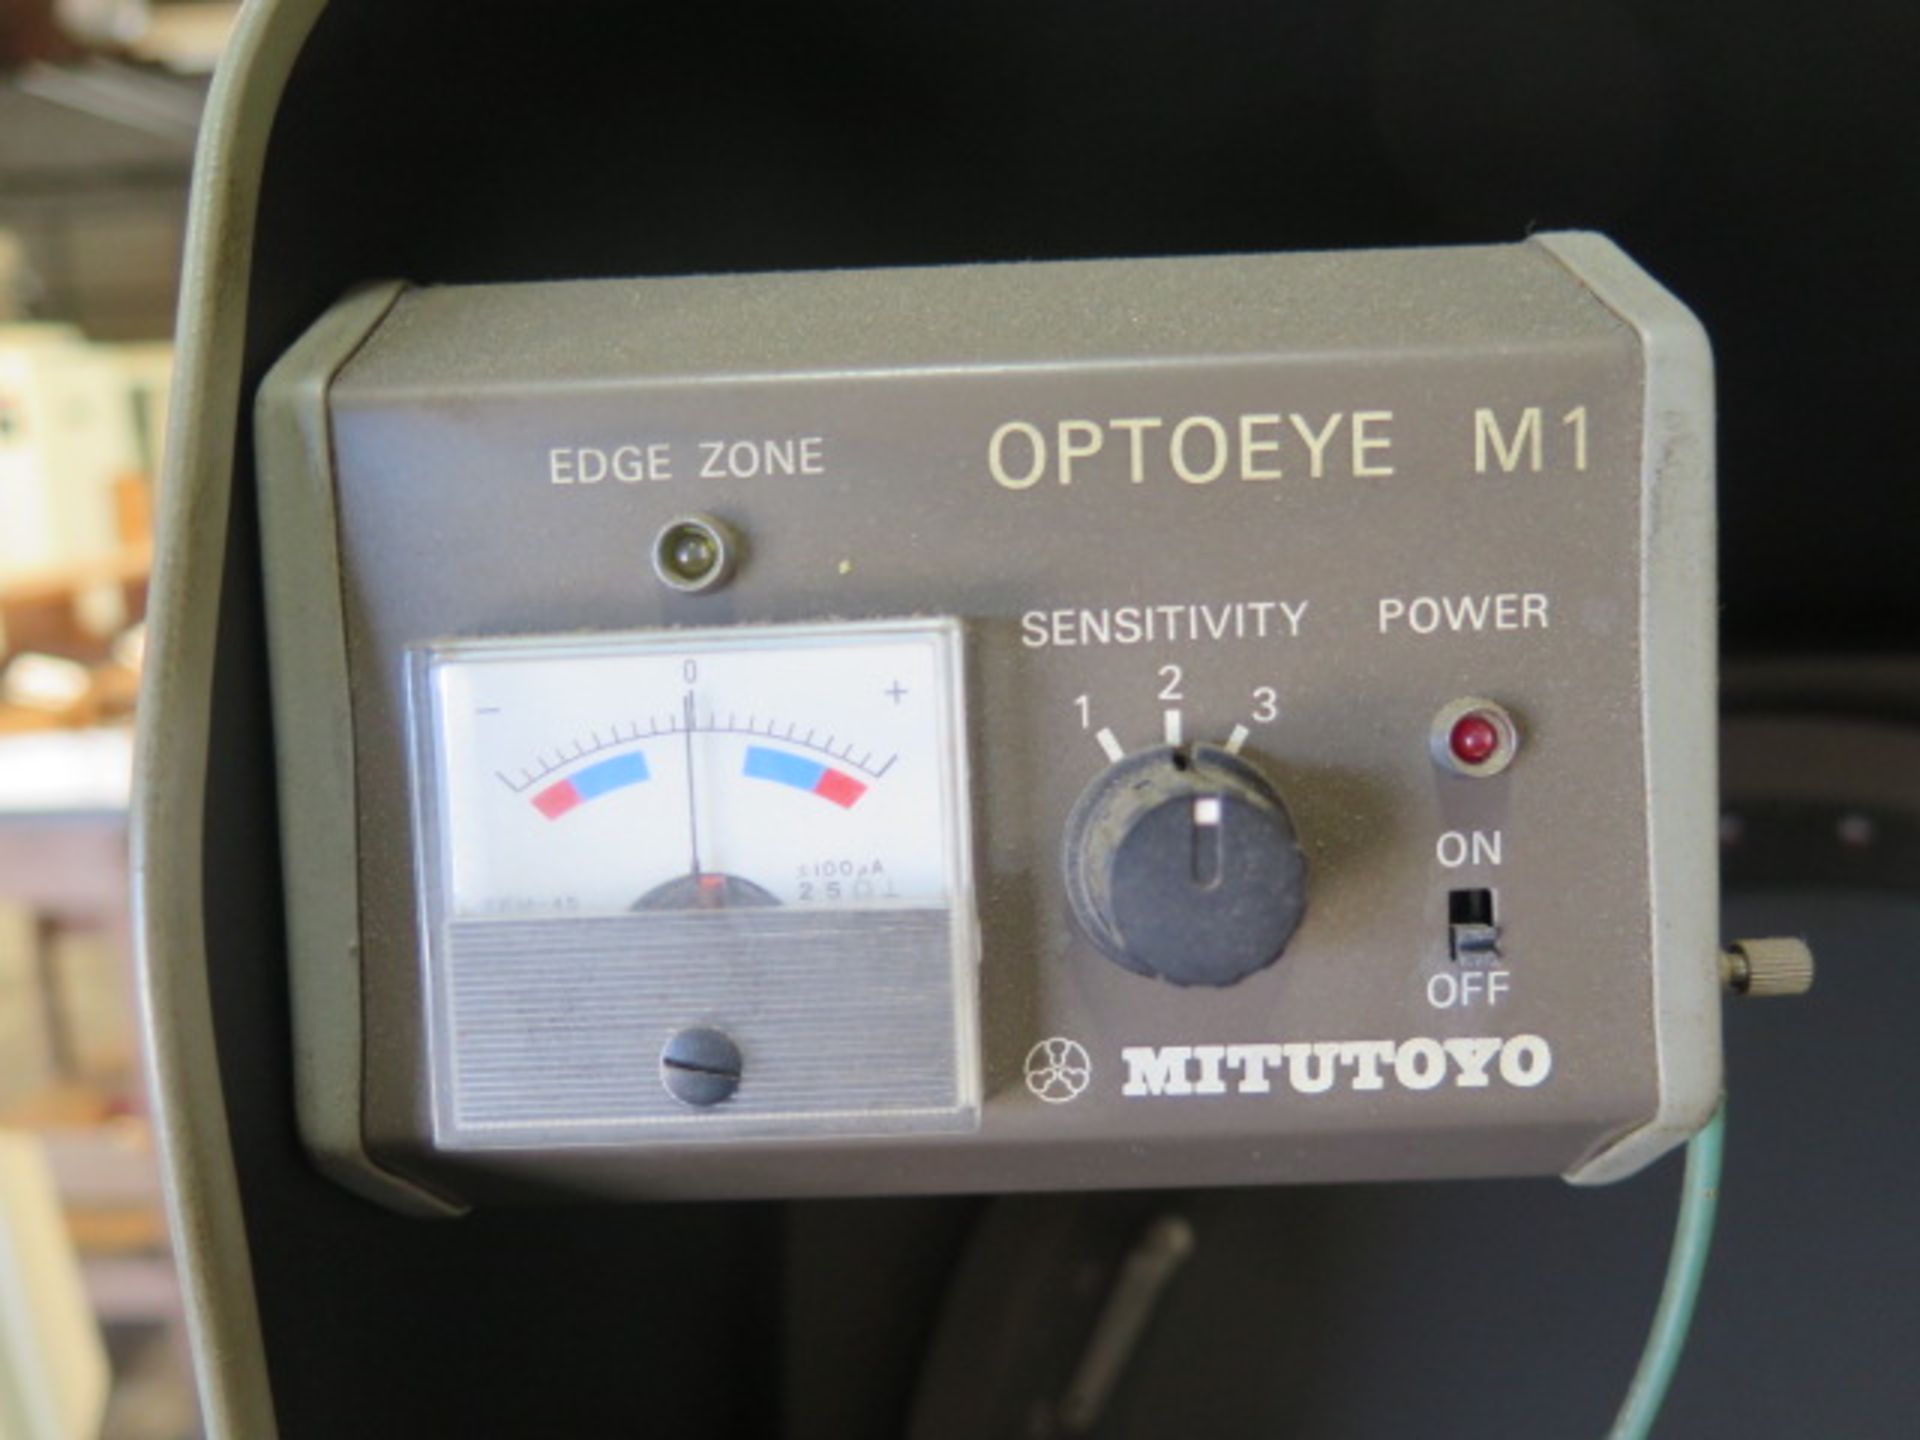 Mitutoyo PH350 13" Optical Comparator s/n 60251 w/ Optoeye M1 Edge Detector, Dial Indicator - Image 4 of 8